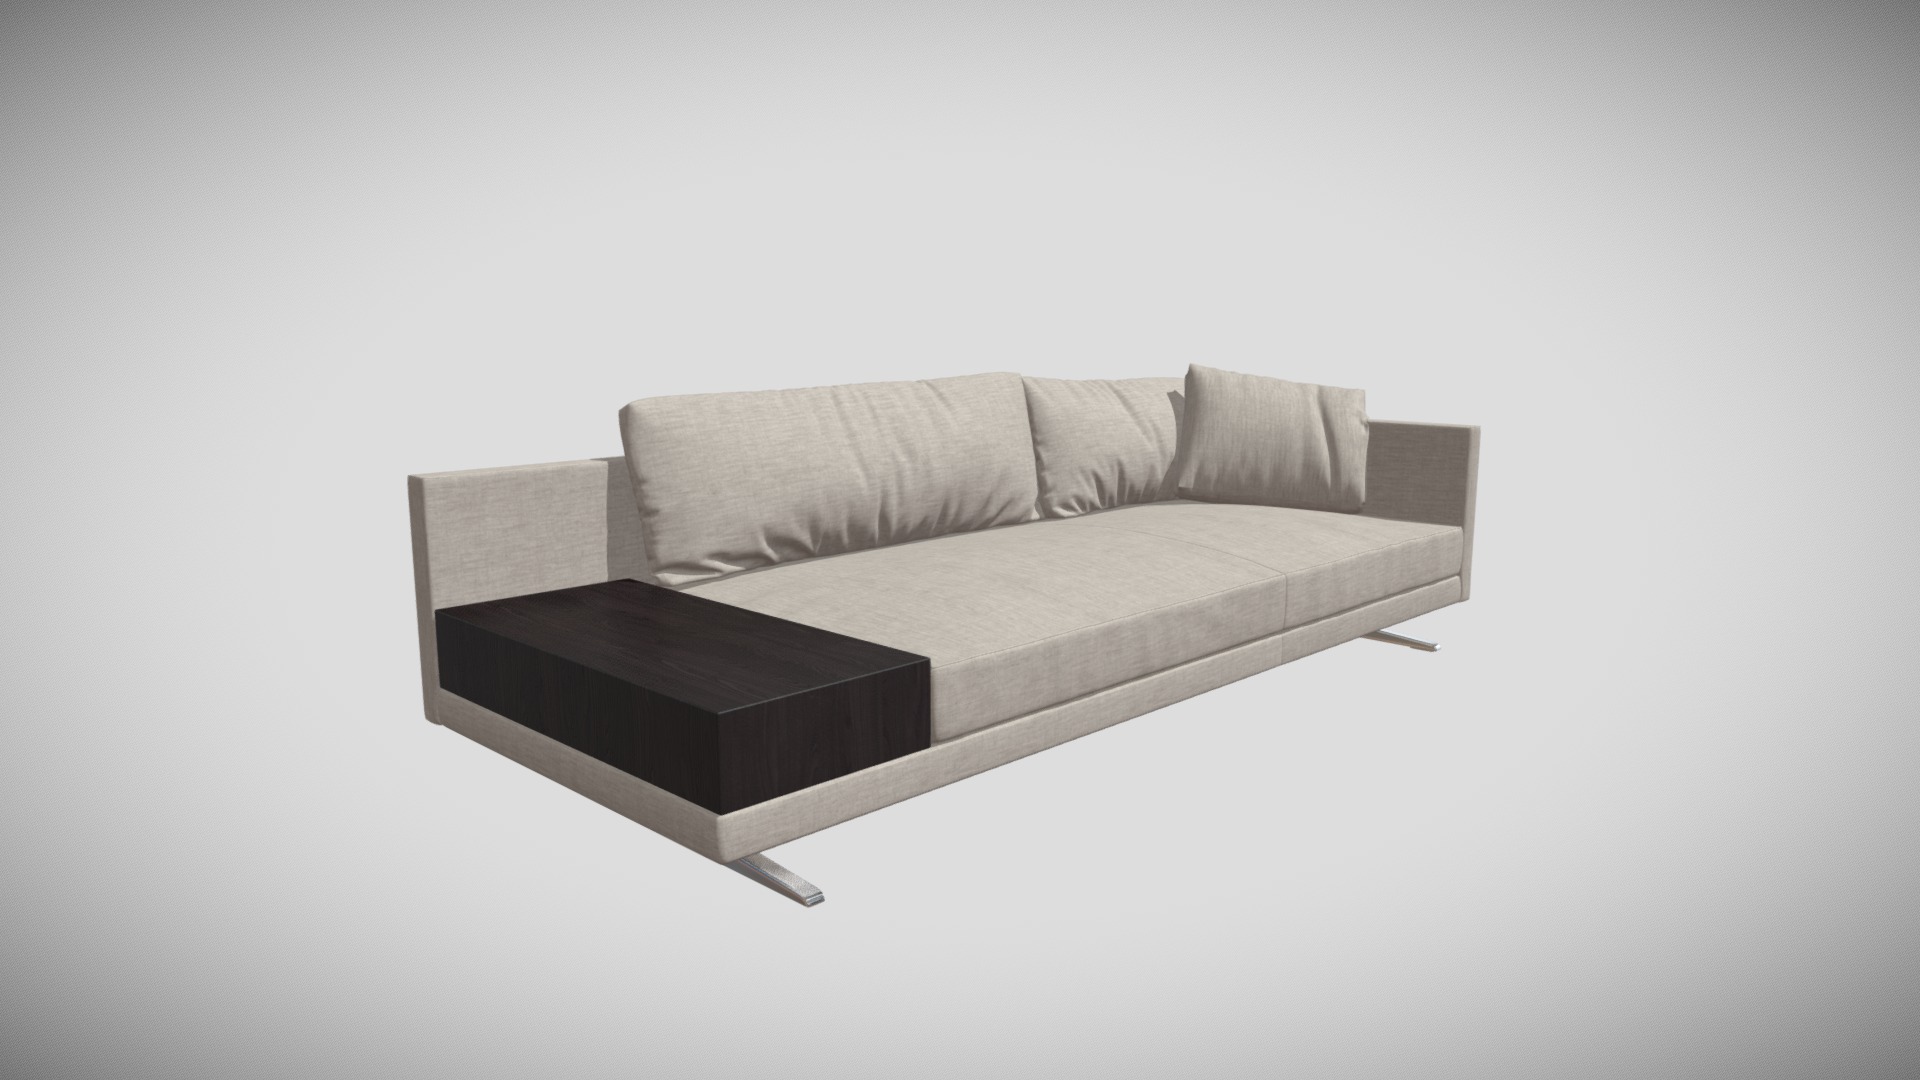 3D model Poliform Mondorian - This is a 3D model of the Poliform Mondorian. The 3D model is about a couch with a cushion.